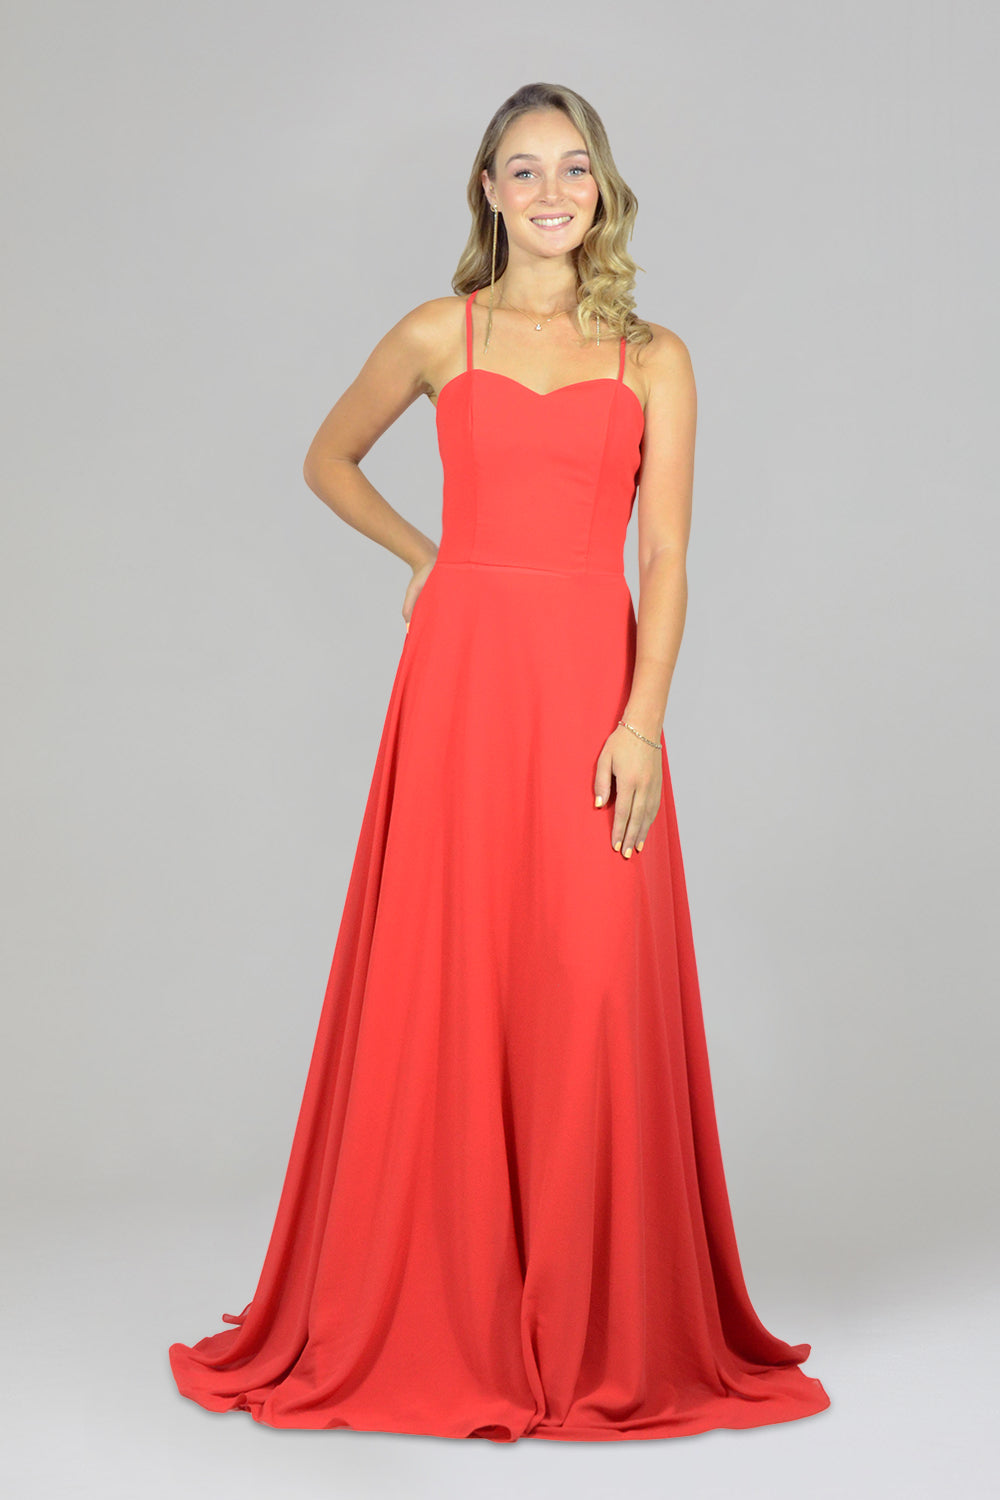 custom made red A line bridesmaid dresses perth australia envious bridal & formal